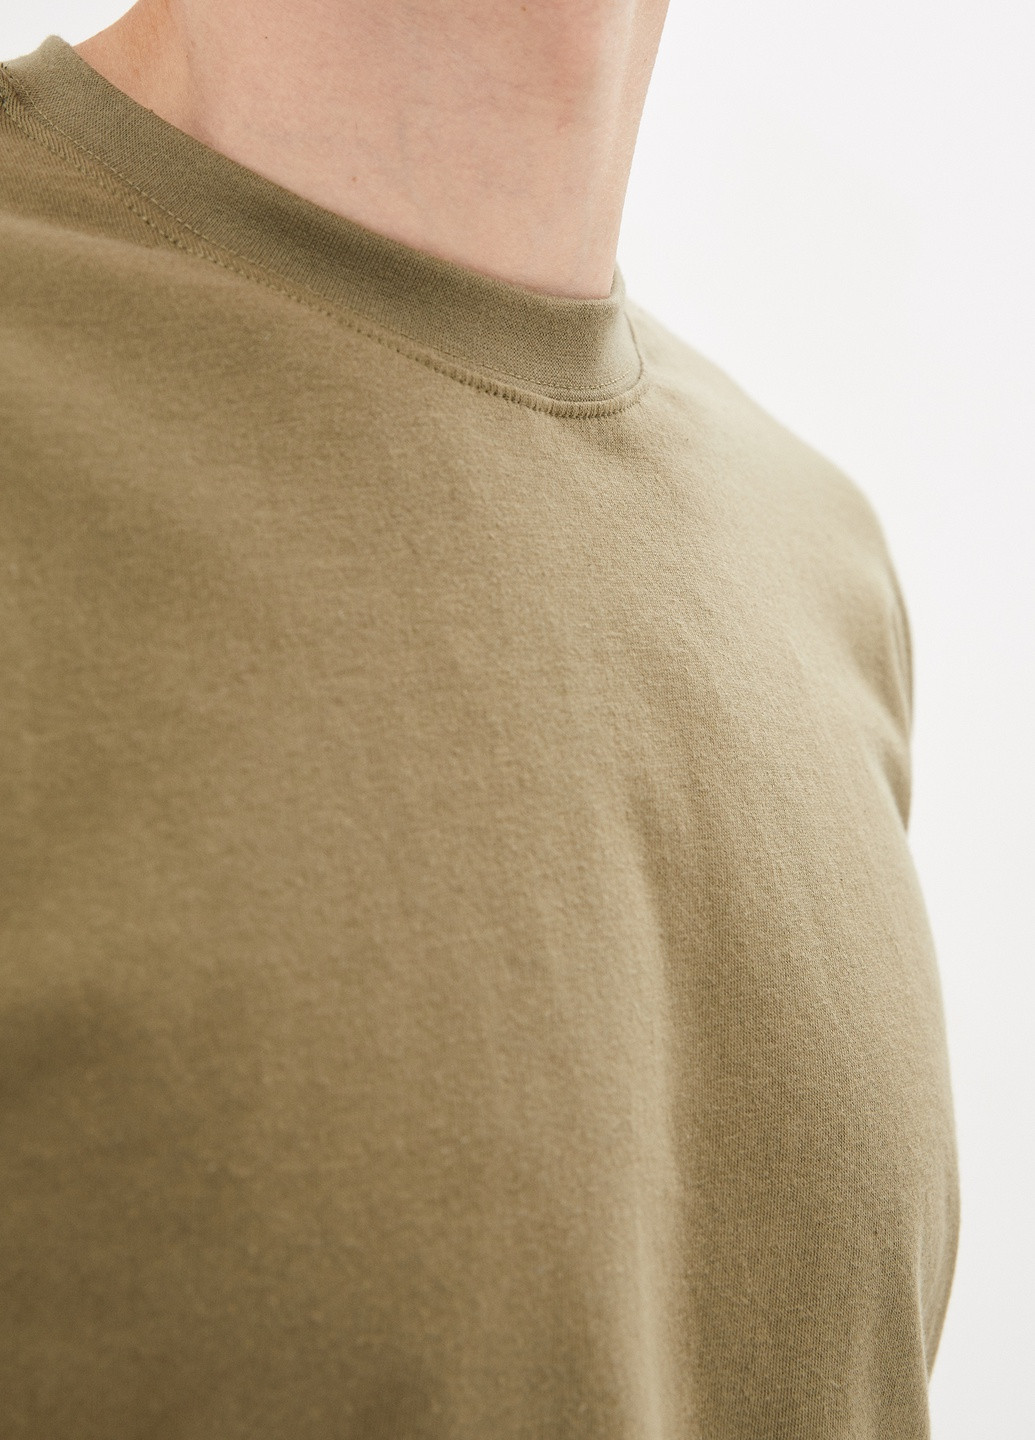 Хаки (оливковая) футболка мужская базовая с коротким рукавом Роза